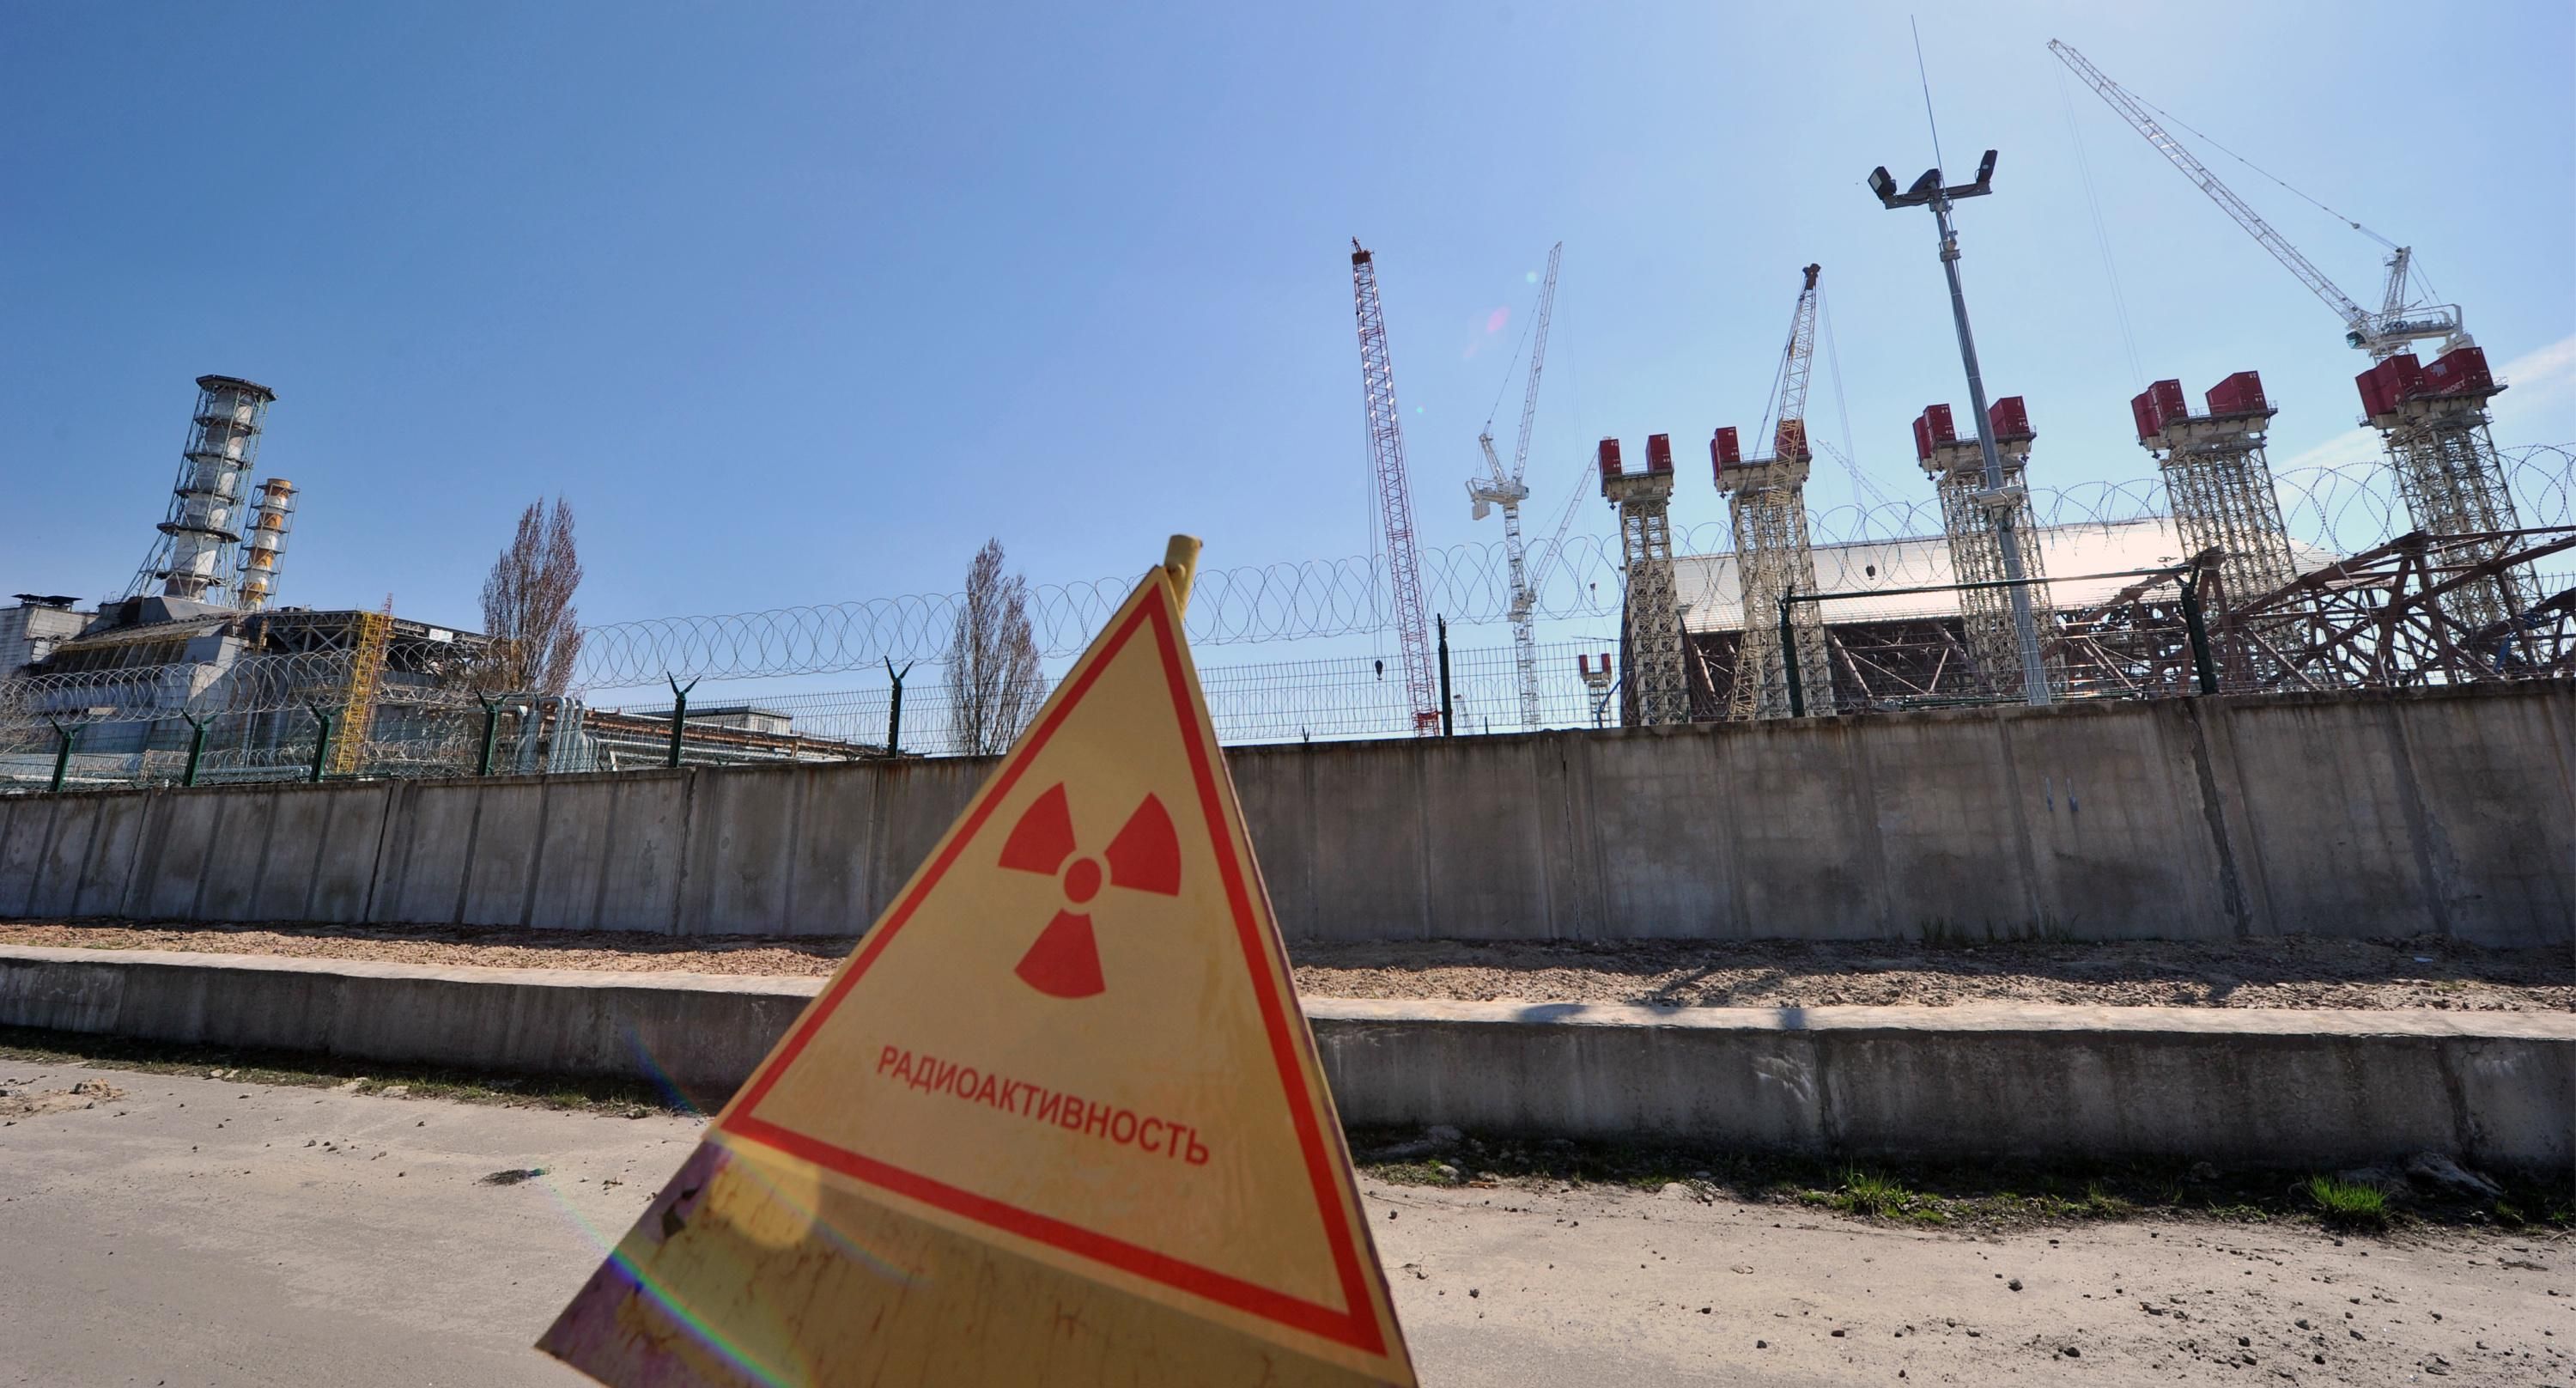 Nuclear site in Ukraine